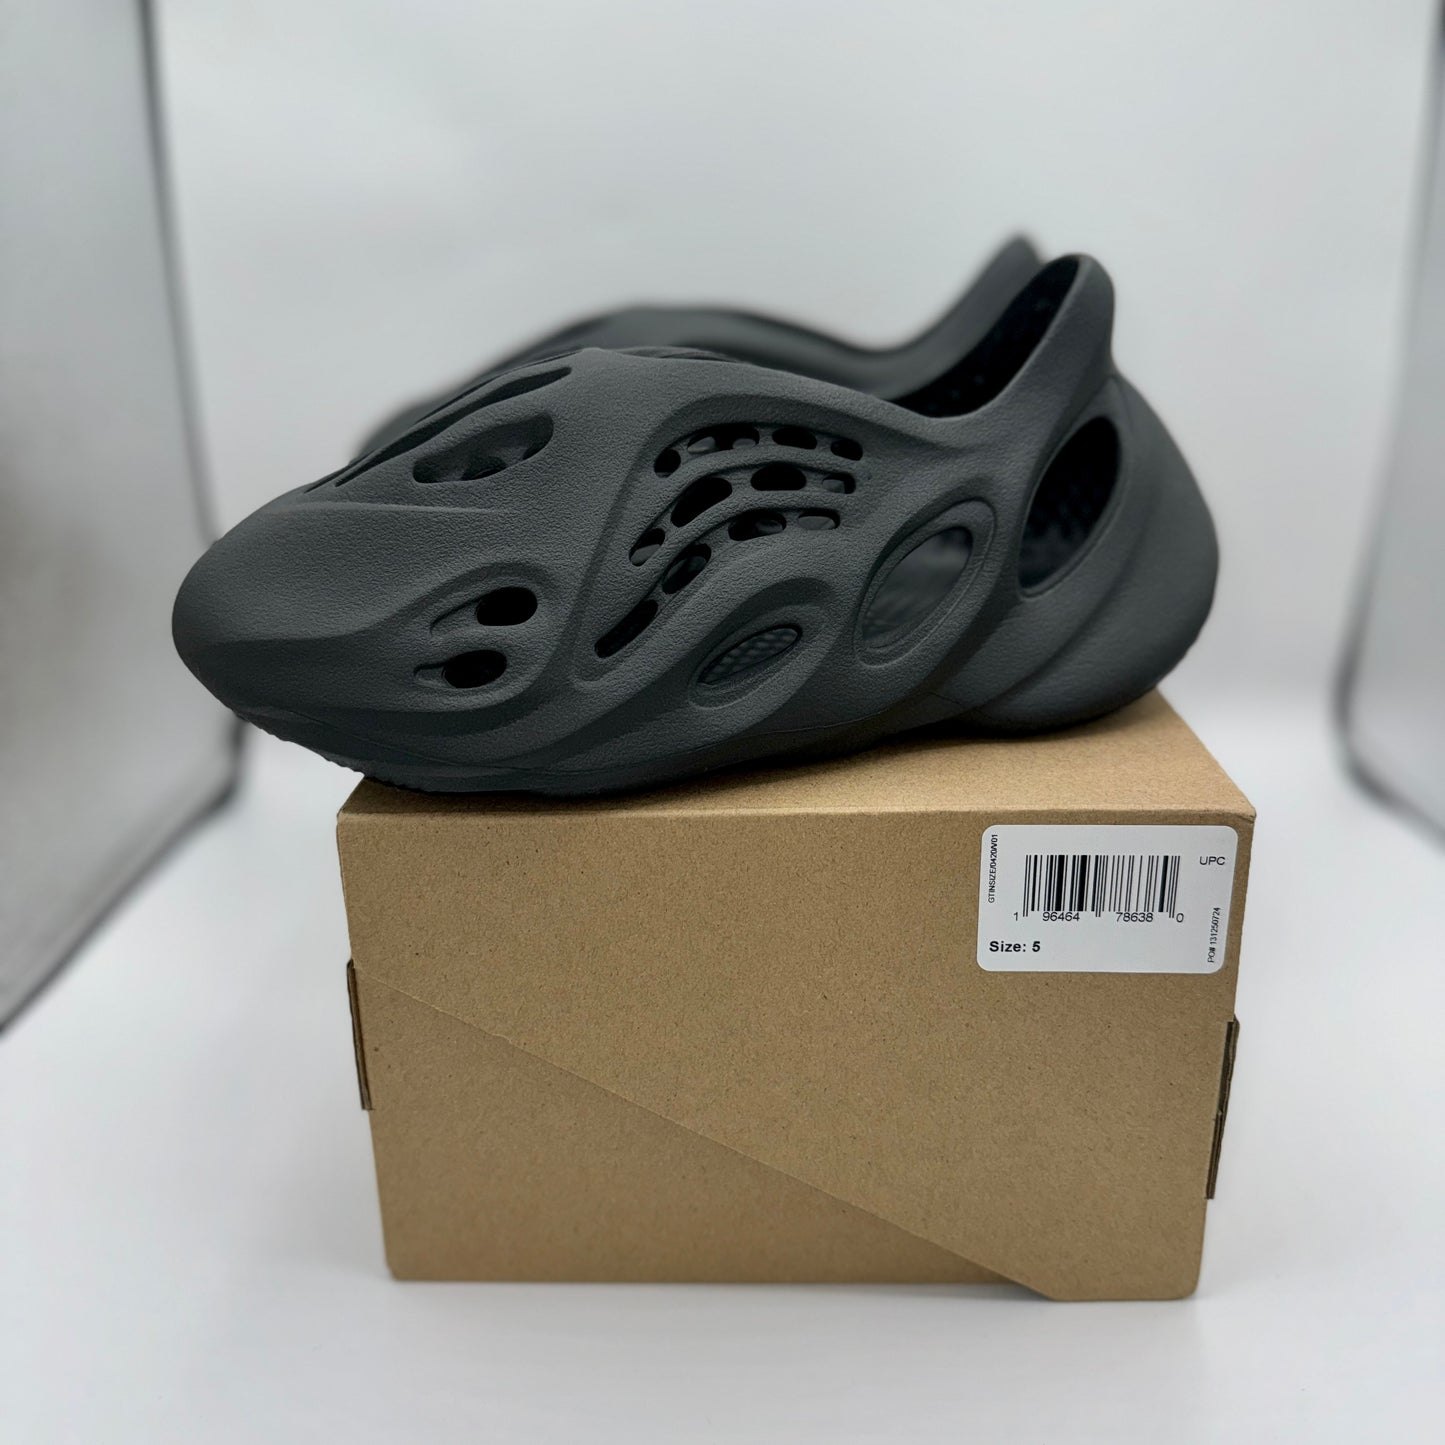 Yeezy Adidas Foam Runner Carbon Yzy Dark Grey Slides Rubber Slip Ons Pre-Owned